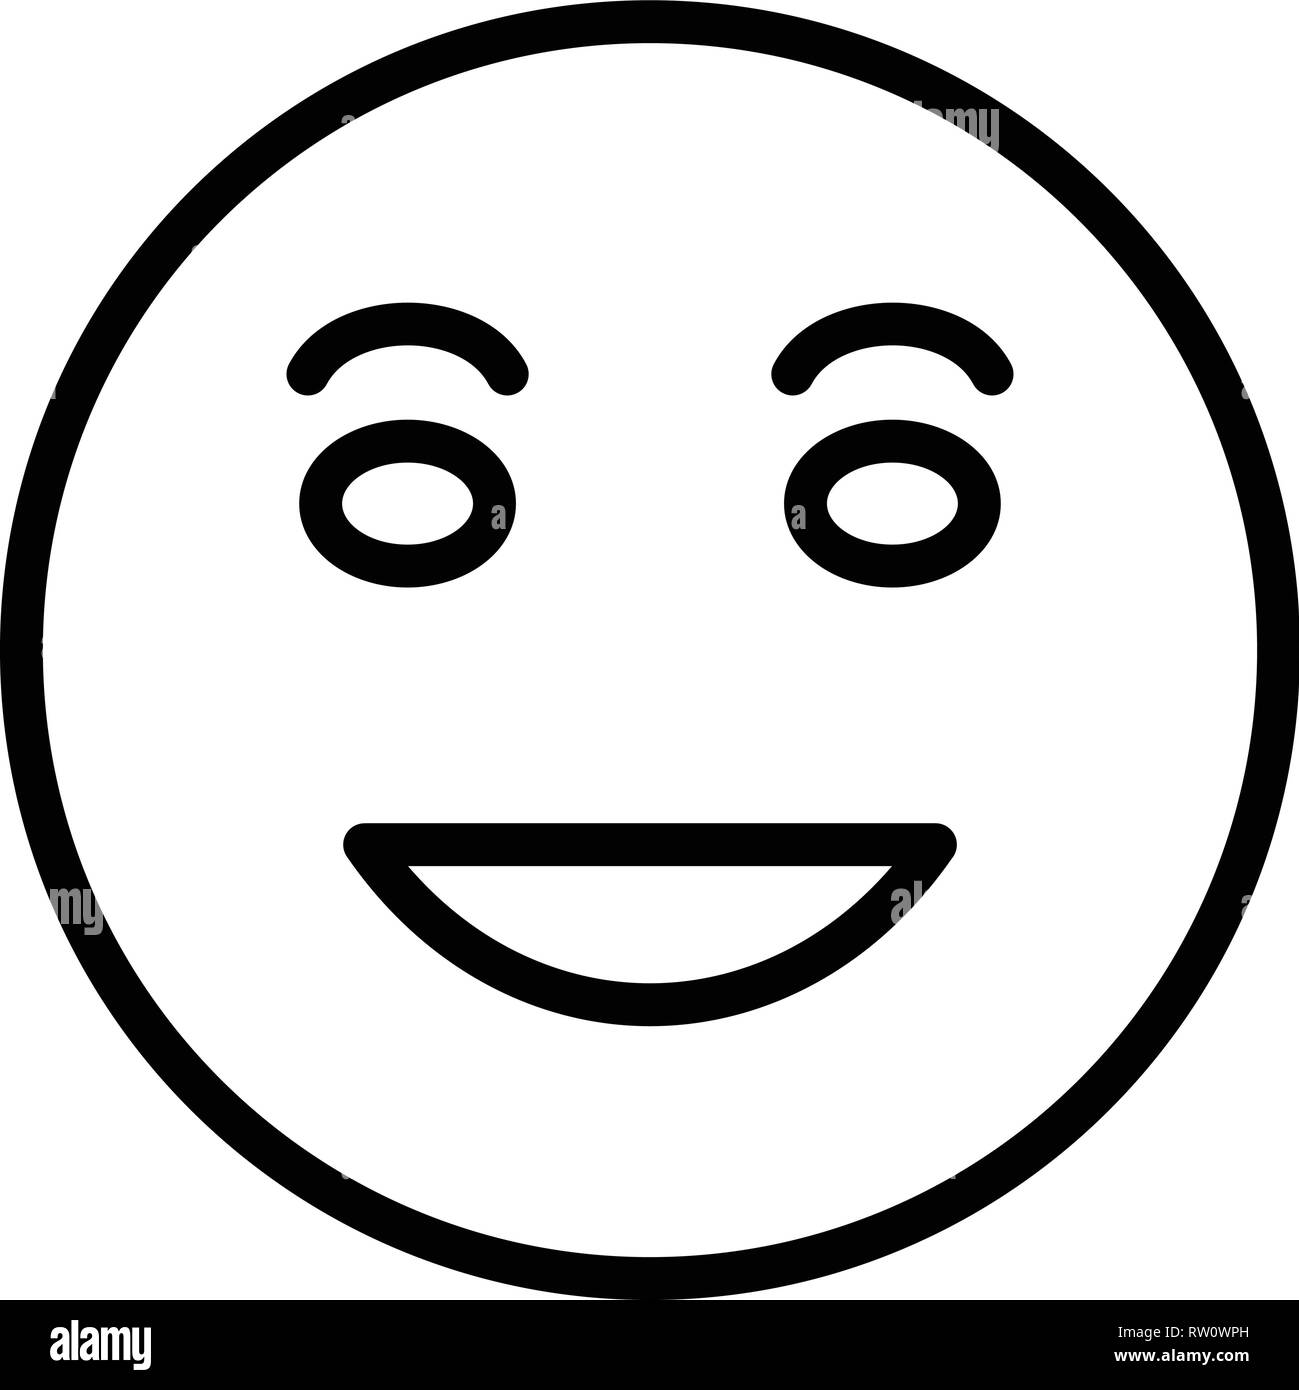 Facebook emoji Black and White Stock Photos & Images - Alamy